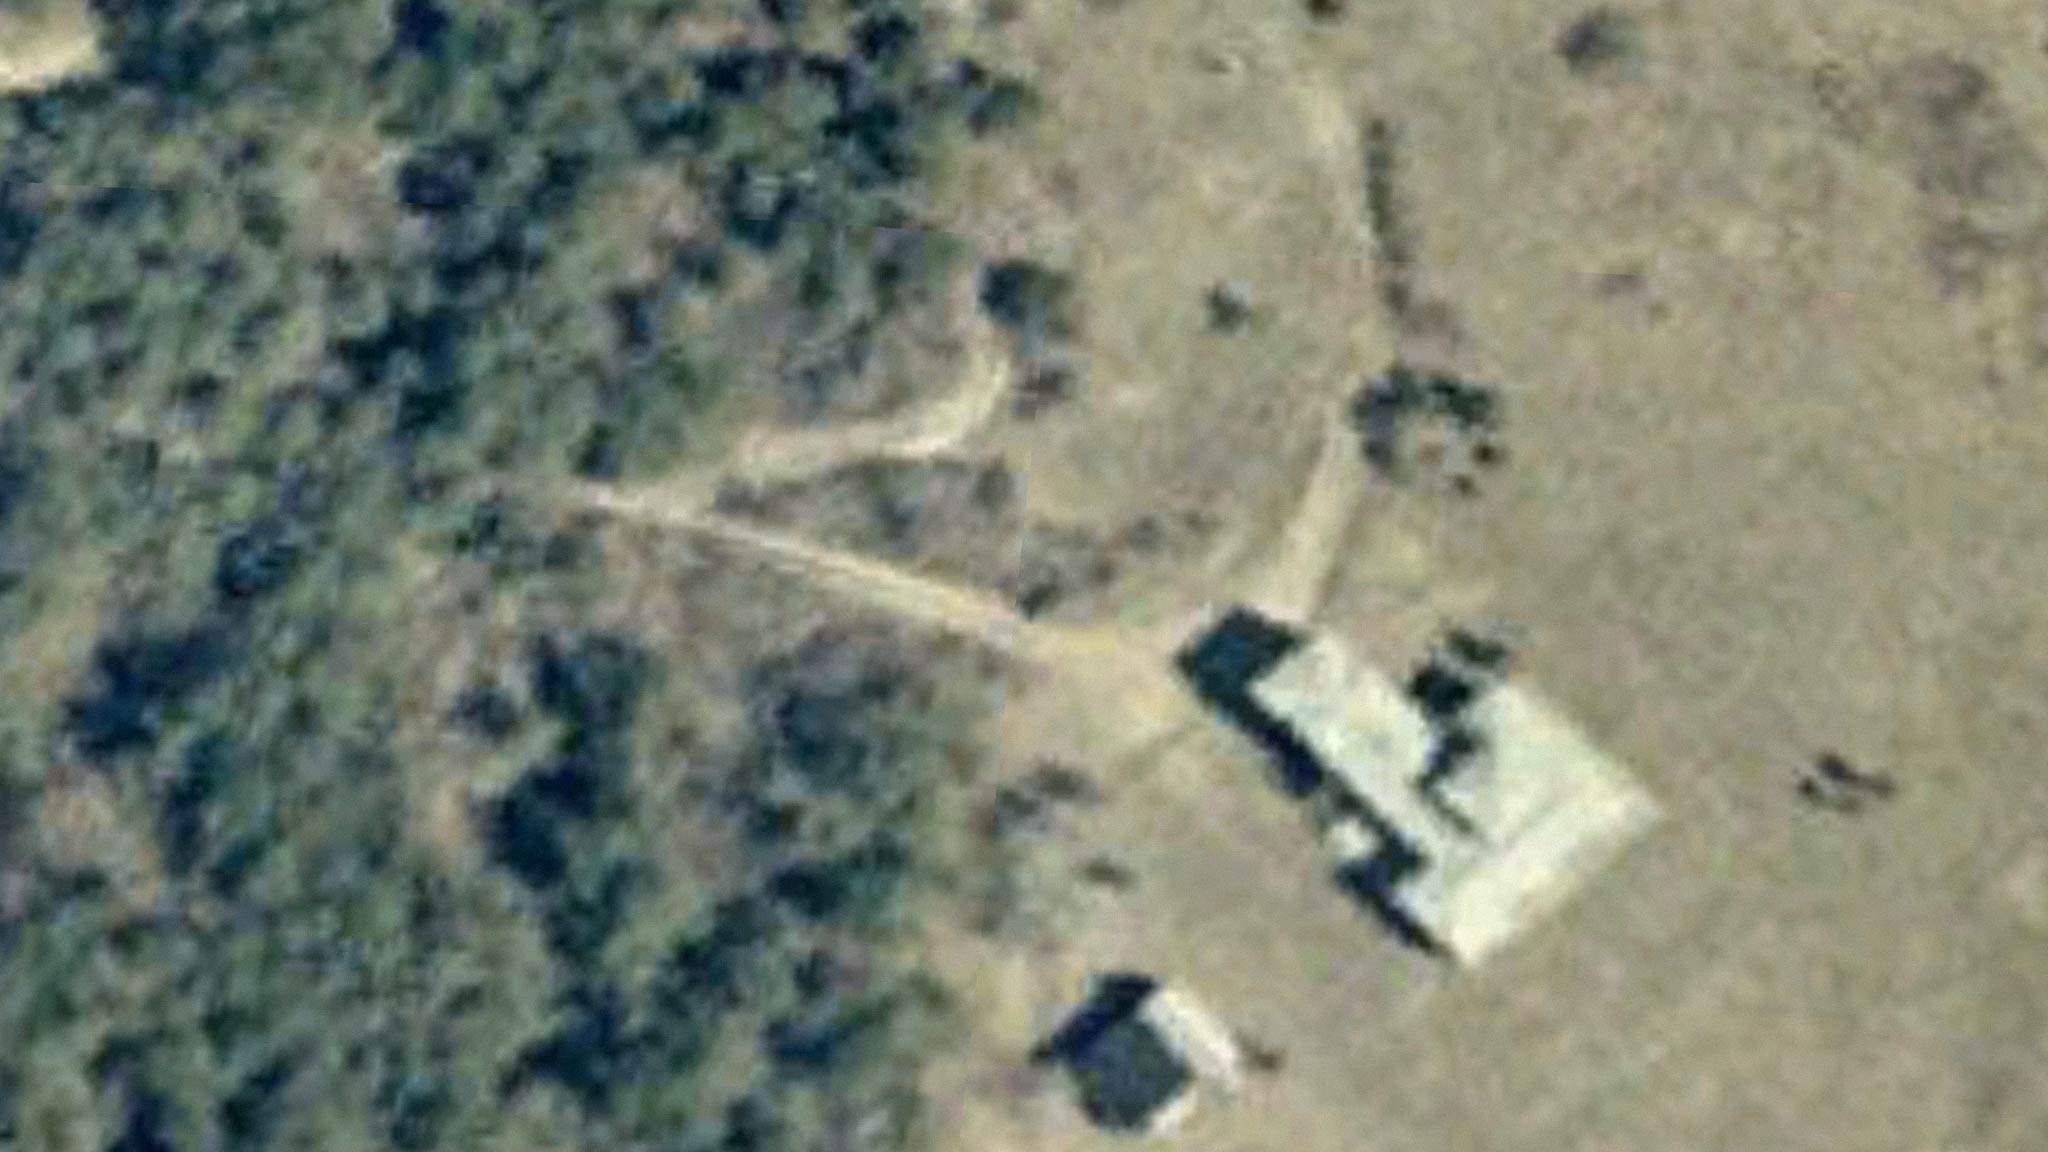 Martha's Vineyard satellite image from 2001 before mansion